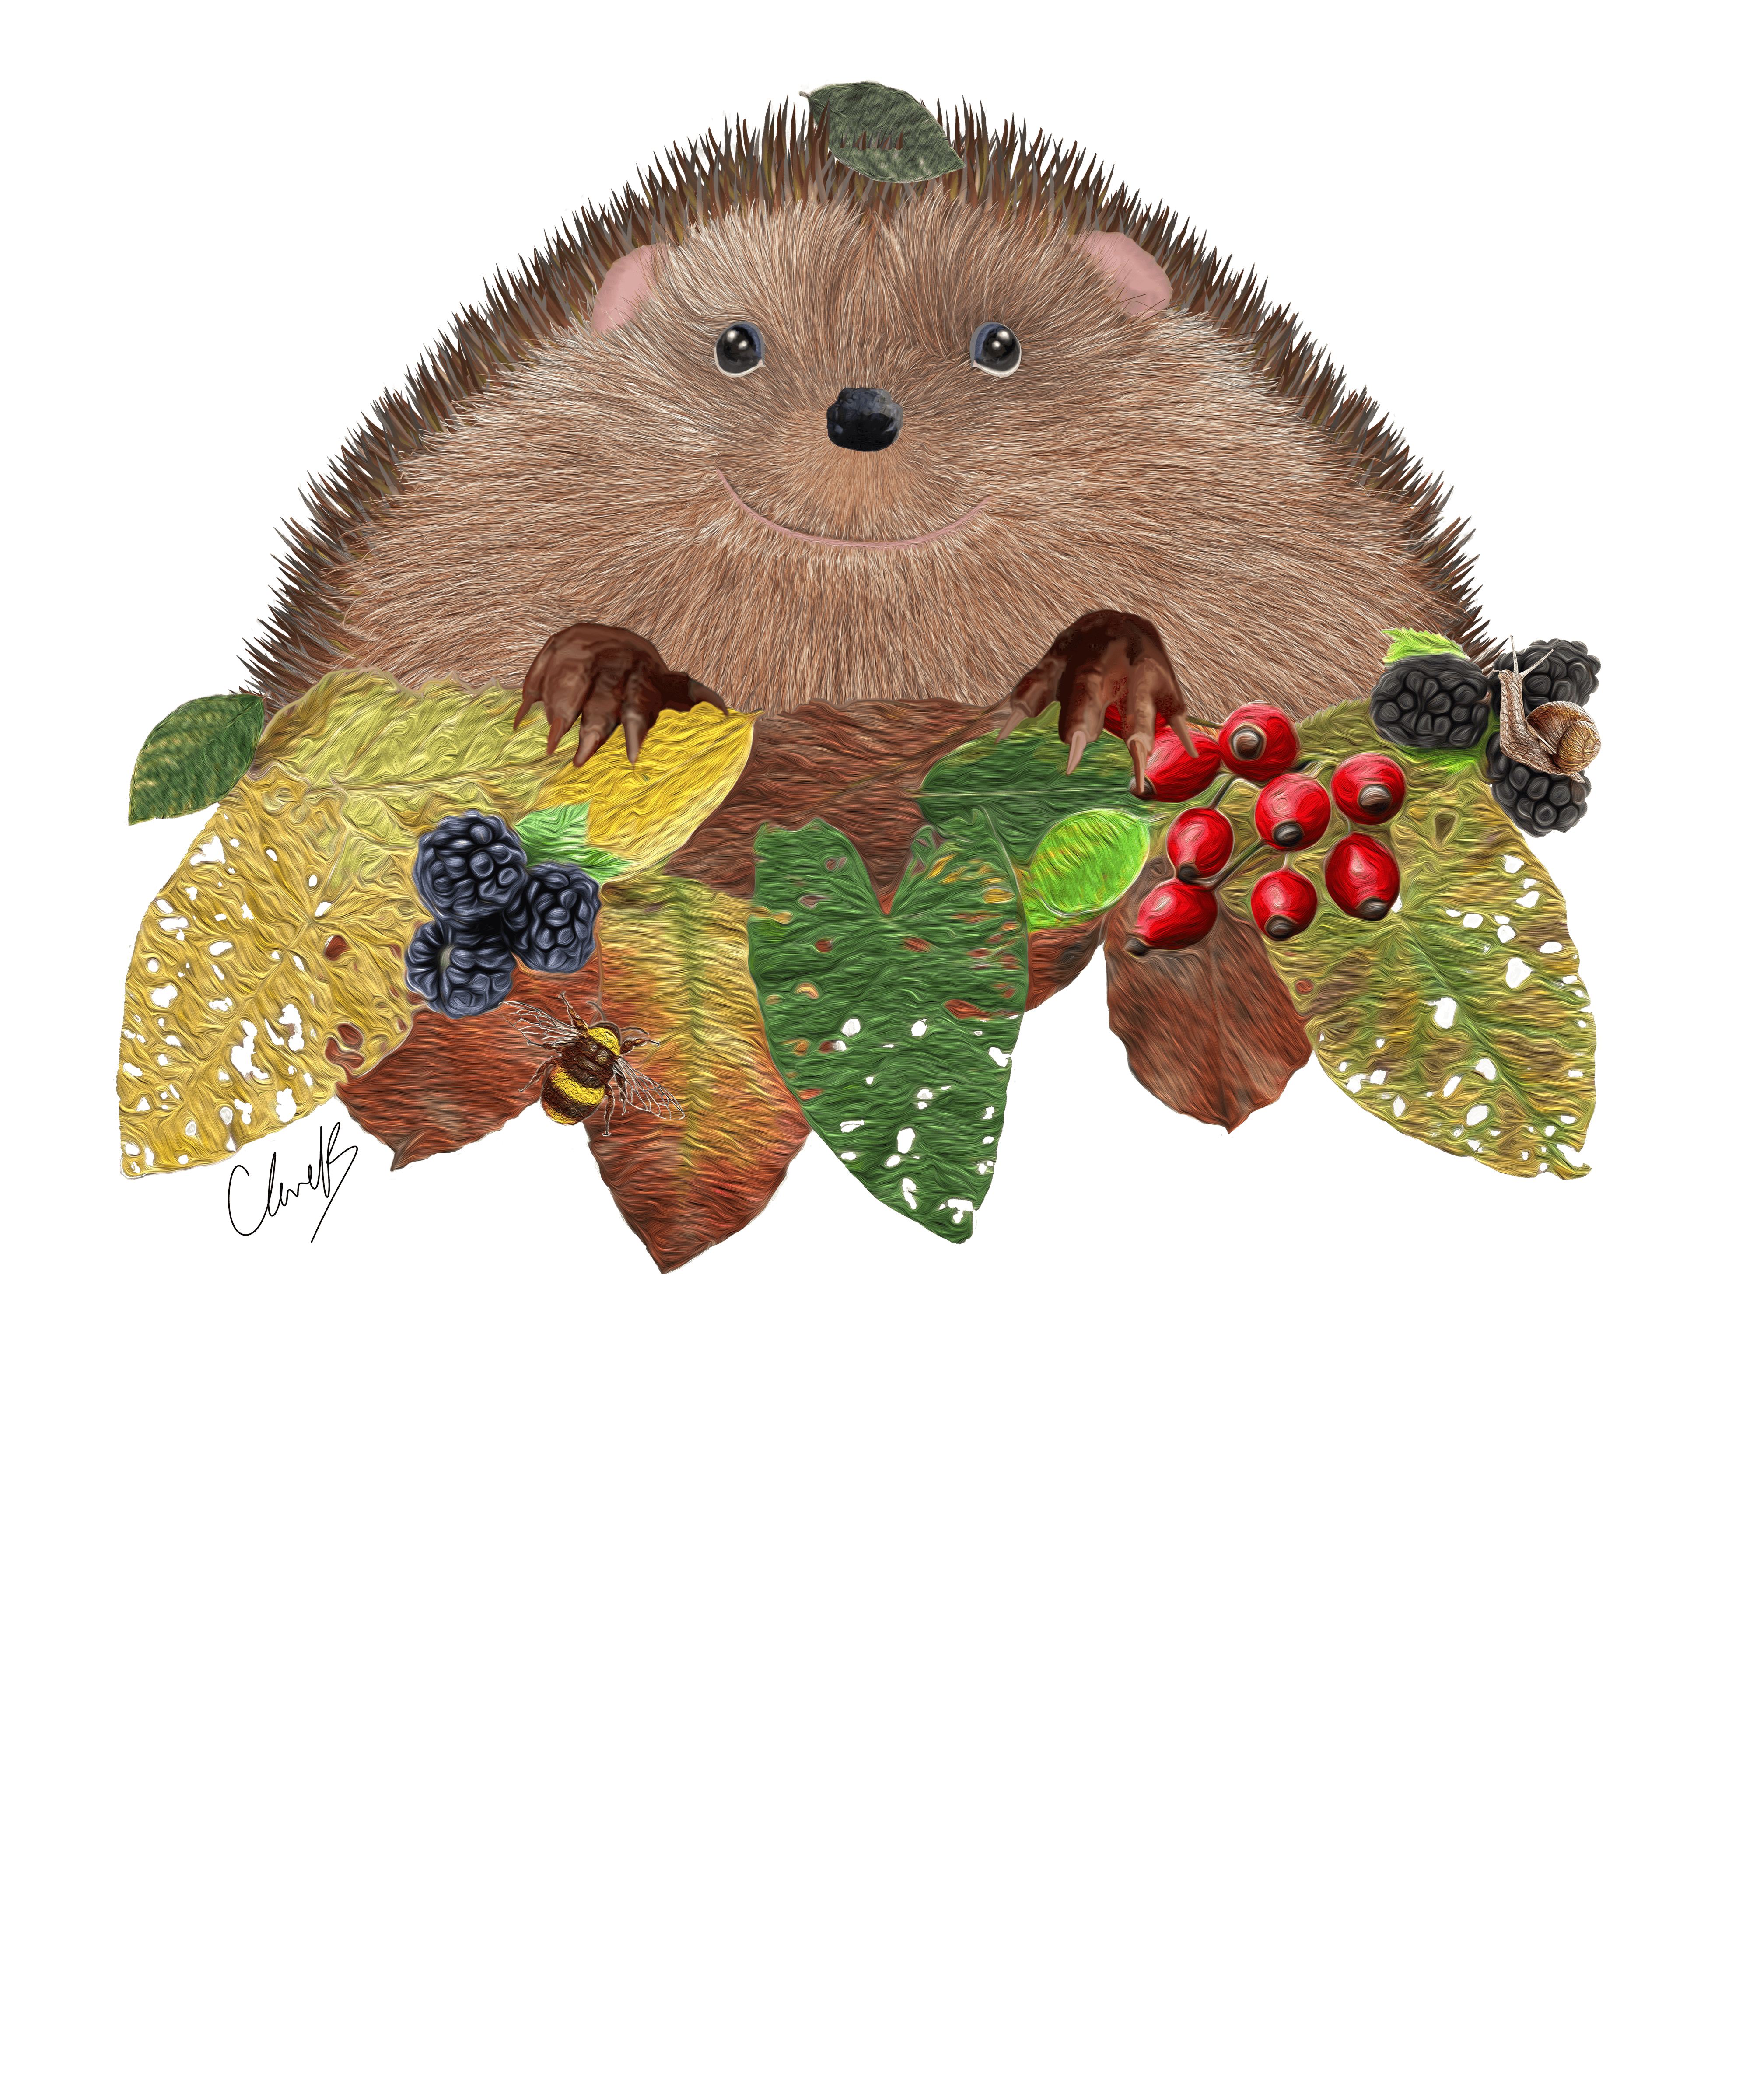 Hedgehog (Erinaceinae)